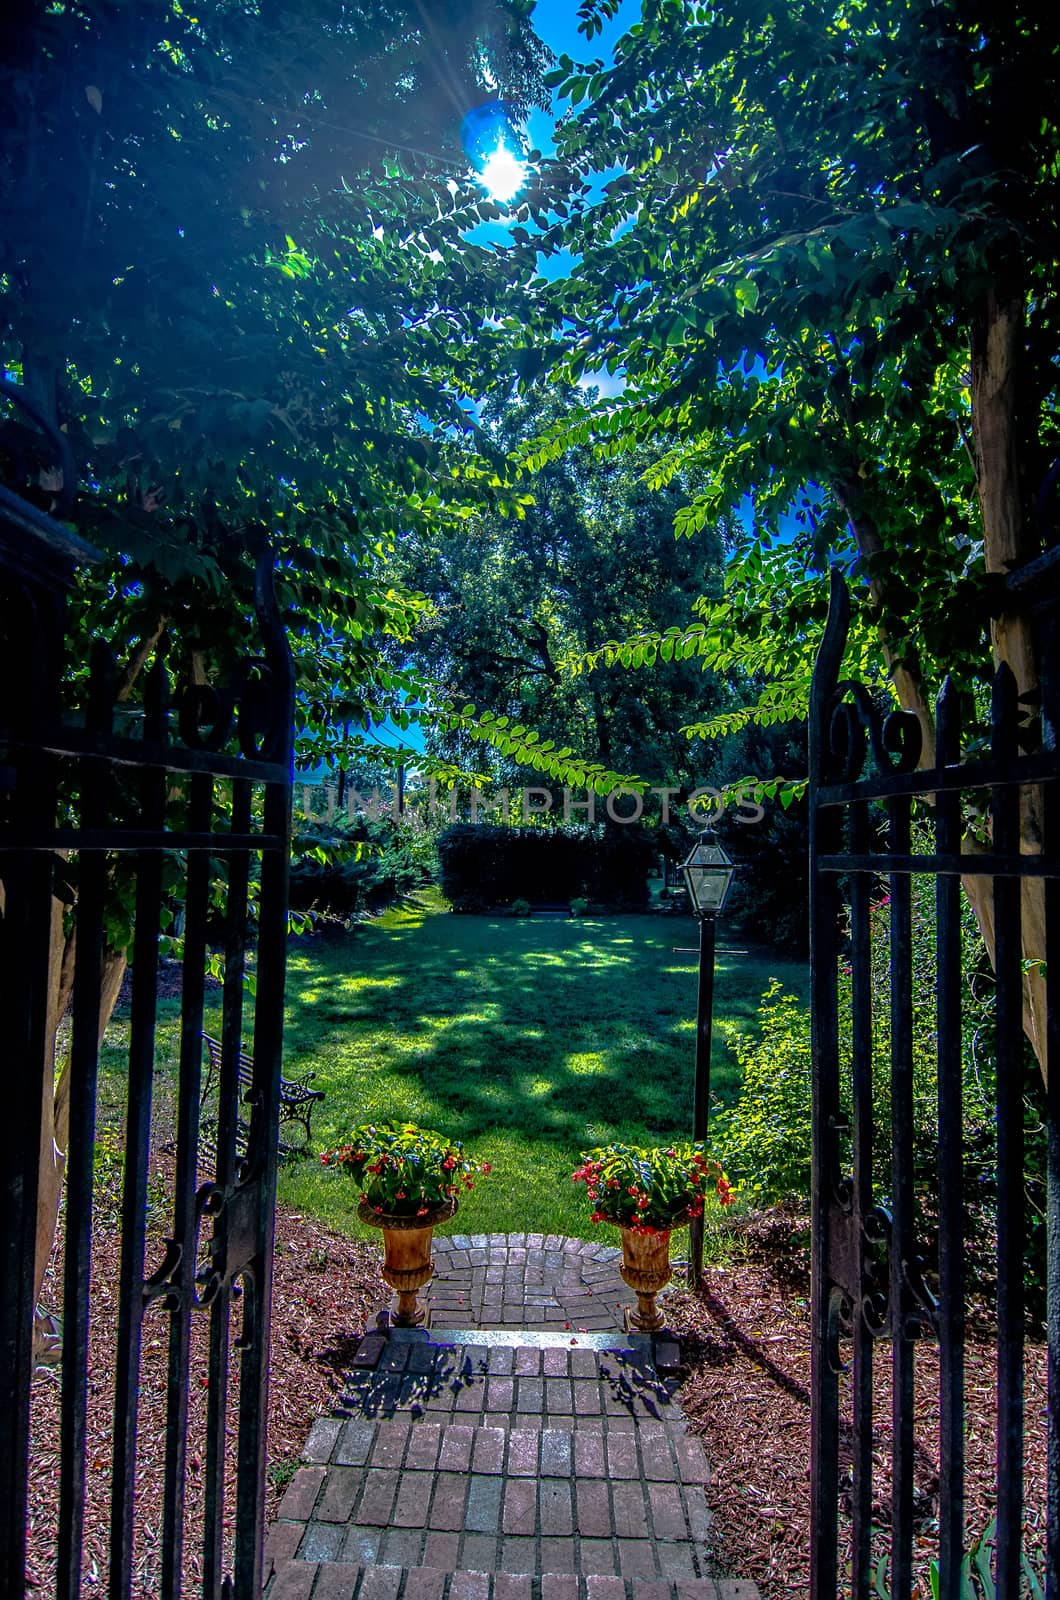 Classical design black wrought iron gate in a beautiful green garden